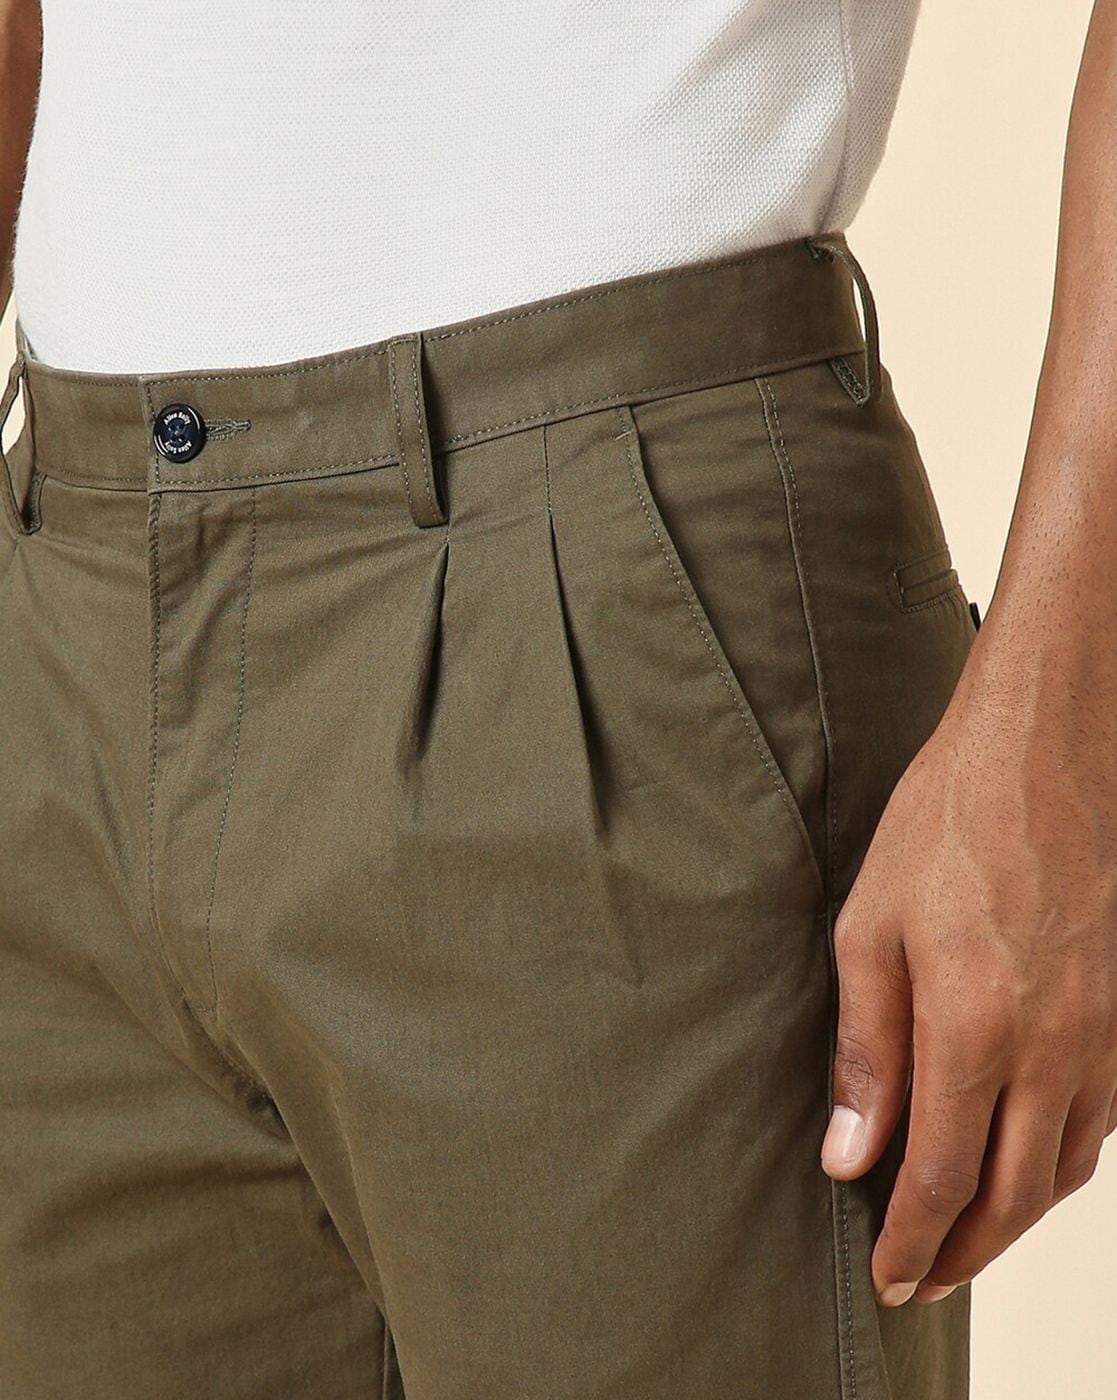 Buy Men Green Slim Fit Textured Casual Trousers Online - 851648 | Allen  Solly